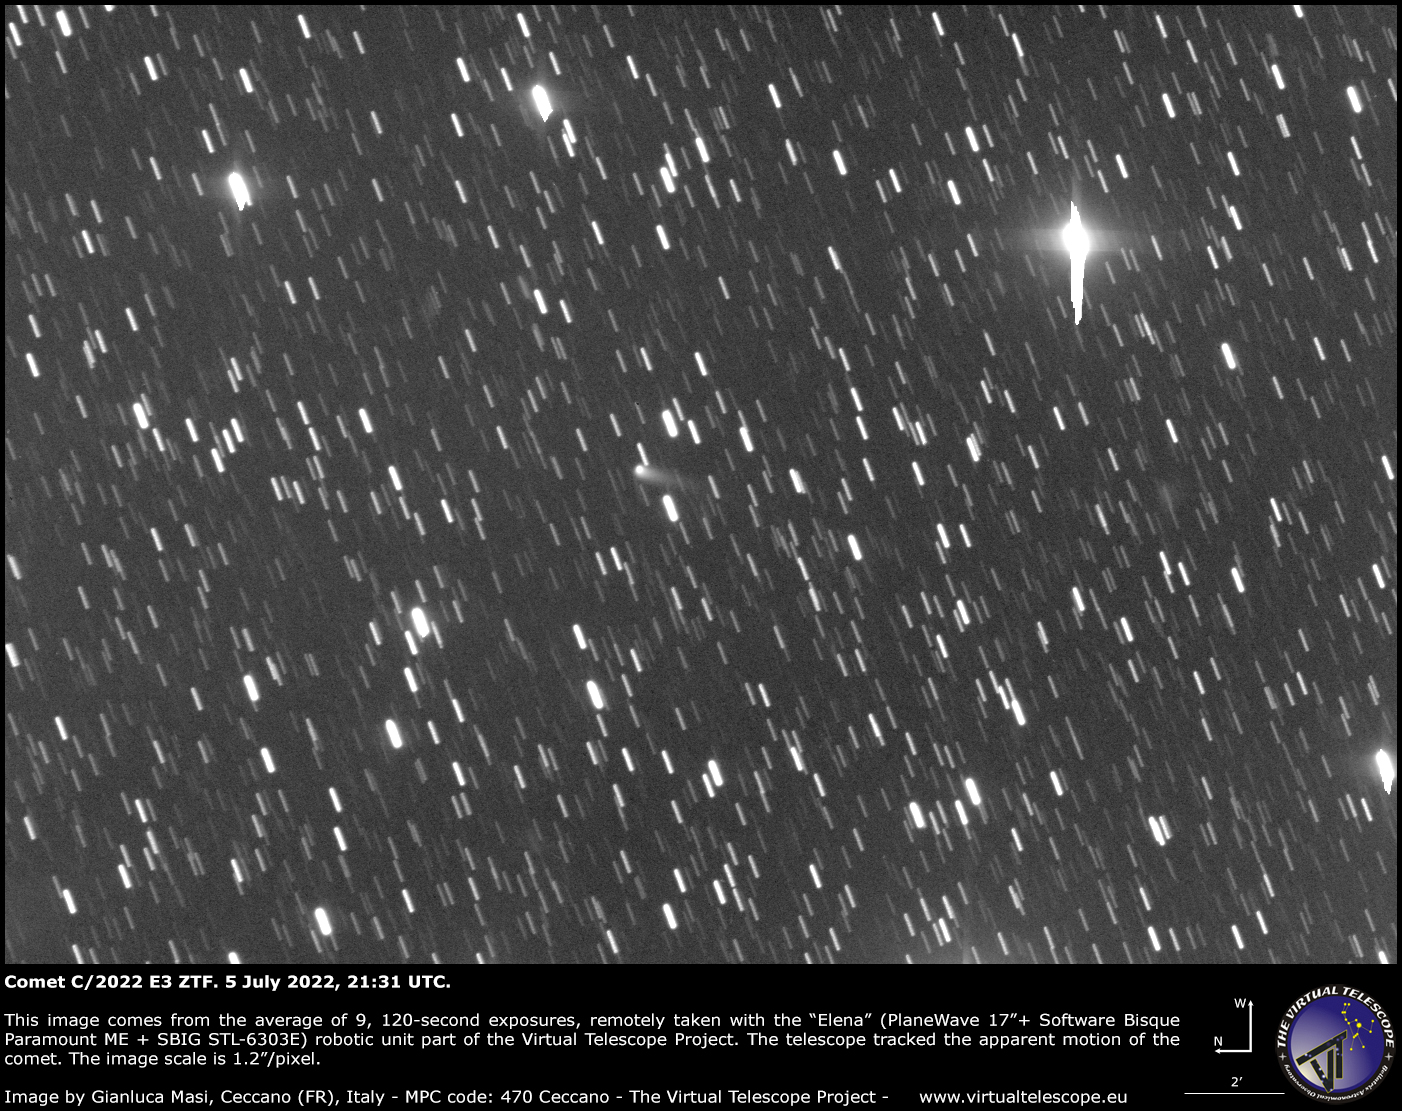 Comet C/2022 E3 ZTF. 5 July 2022.